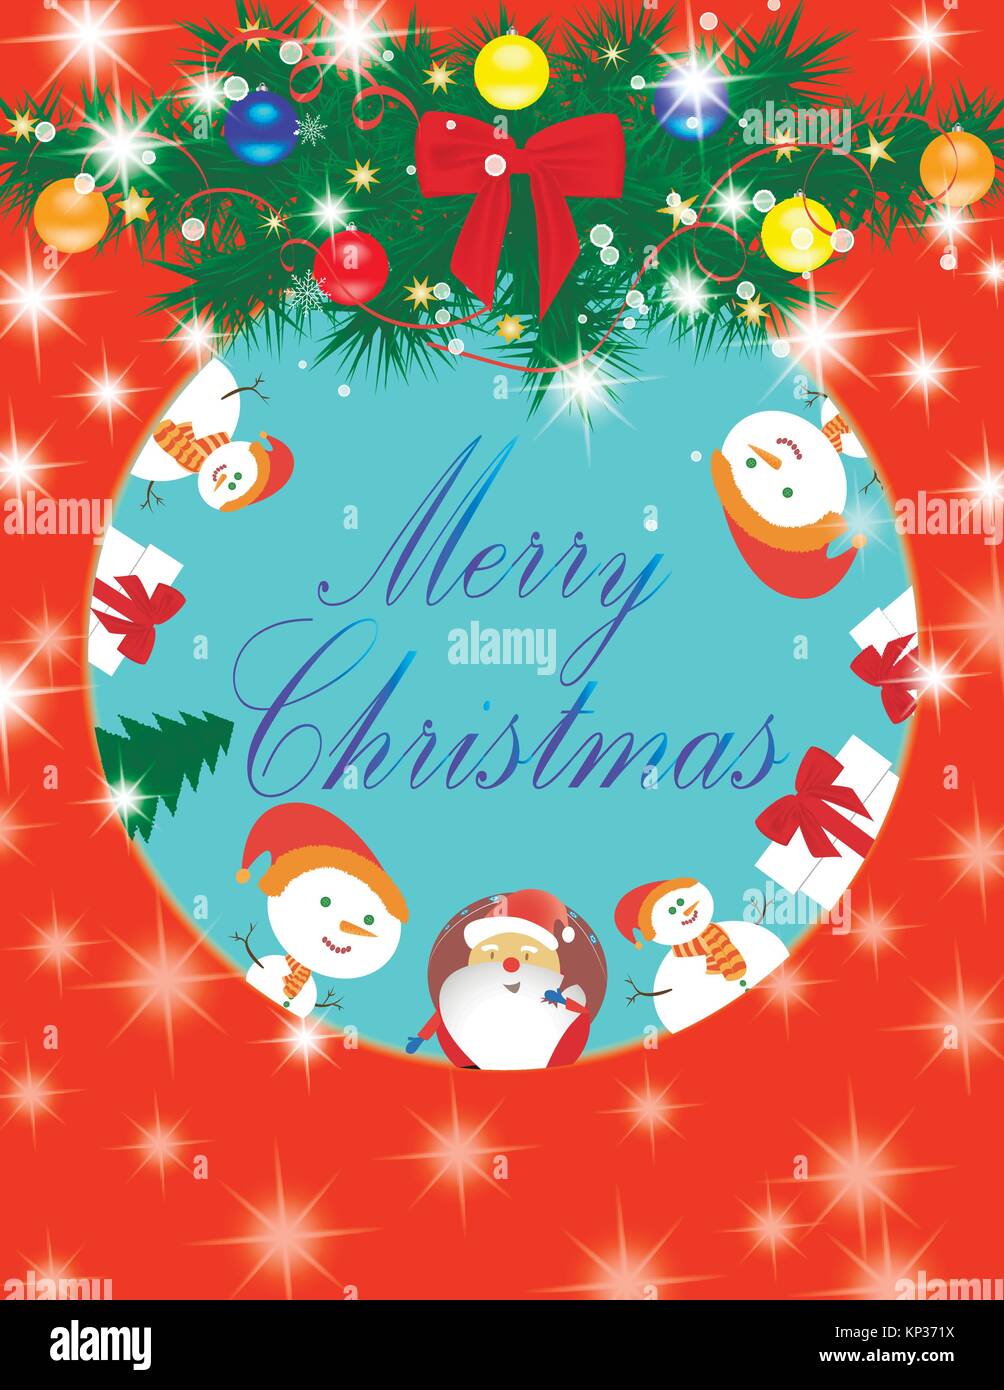 Merry Christmas Card Santa Claus, snowman, gift Stock Vector